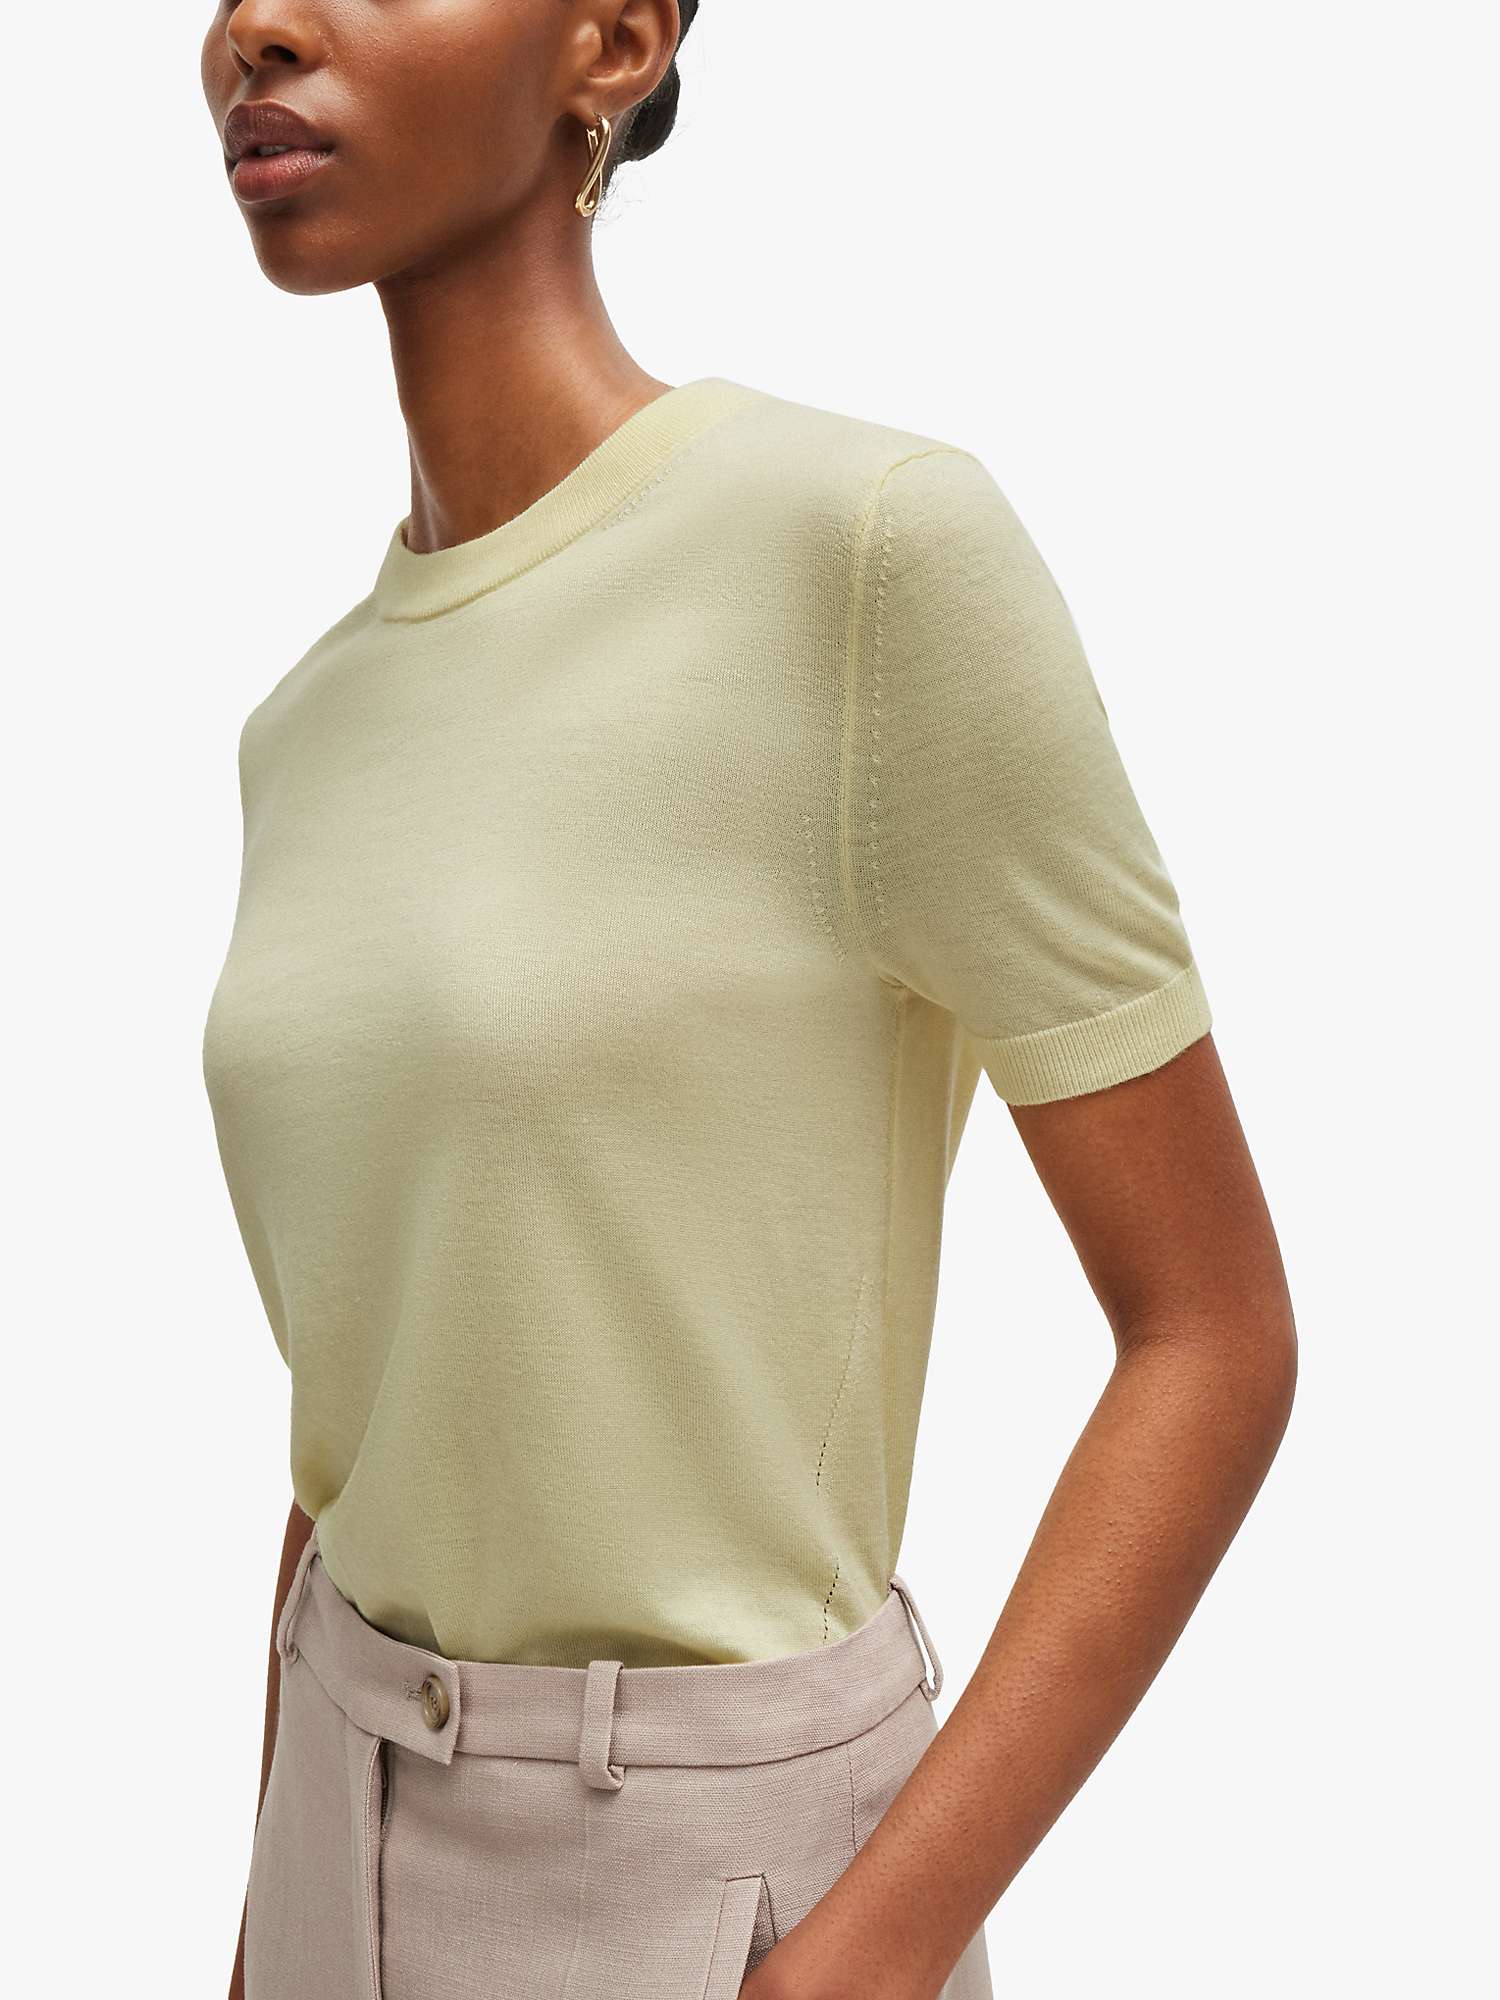 Buy BOSS Merino Wool Short Sleeve Top, Open Yellow Online at johnlewis.com